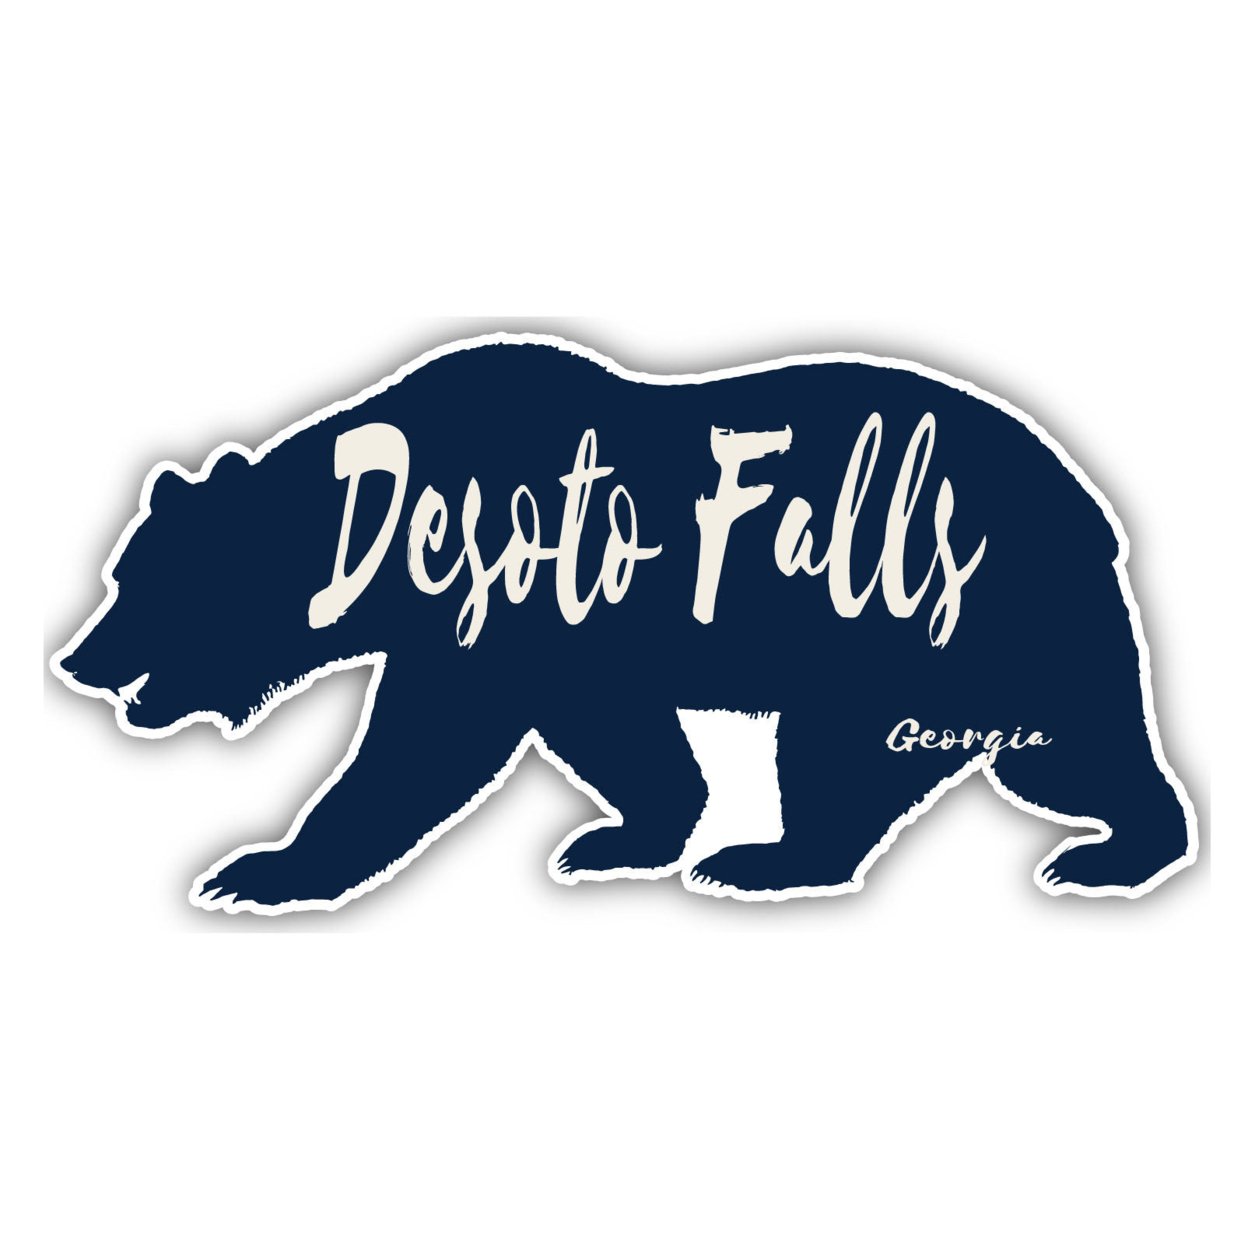 DeSoto Falls Georgia Souvenir Decorative Stickers (Choose Theme And Size) - 4-Pack, 2-Inch, Bear